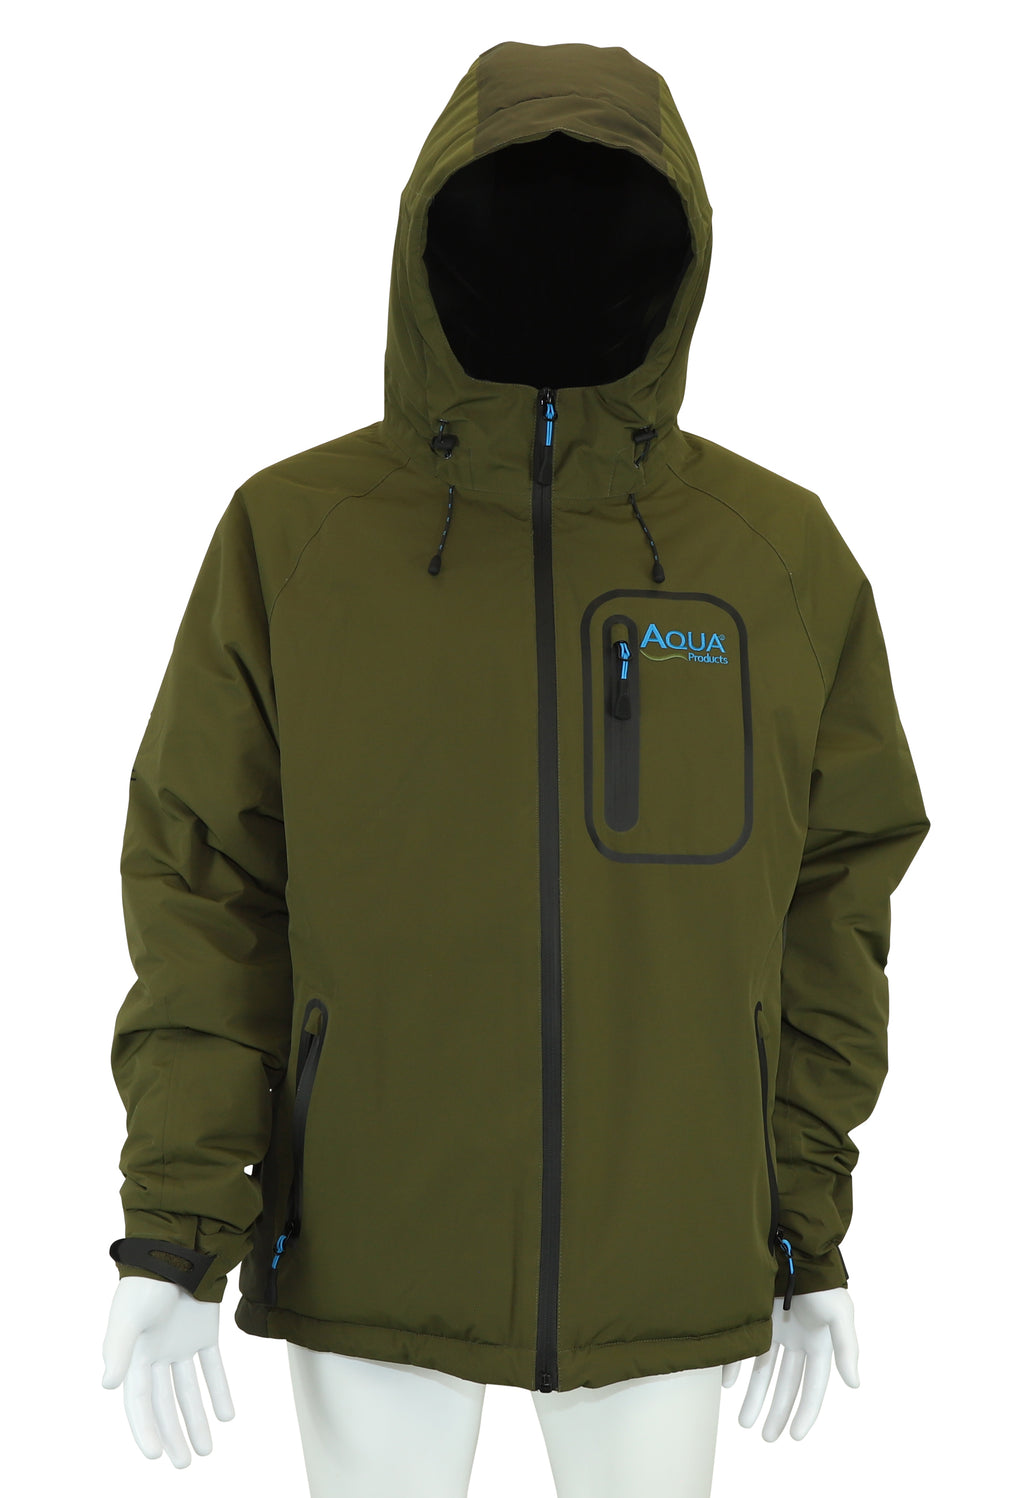 AQUA AQUA F12 Thermal Jacket - FREE 1KG BOILIES  - Parkfield Angling Centre